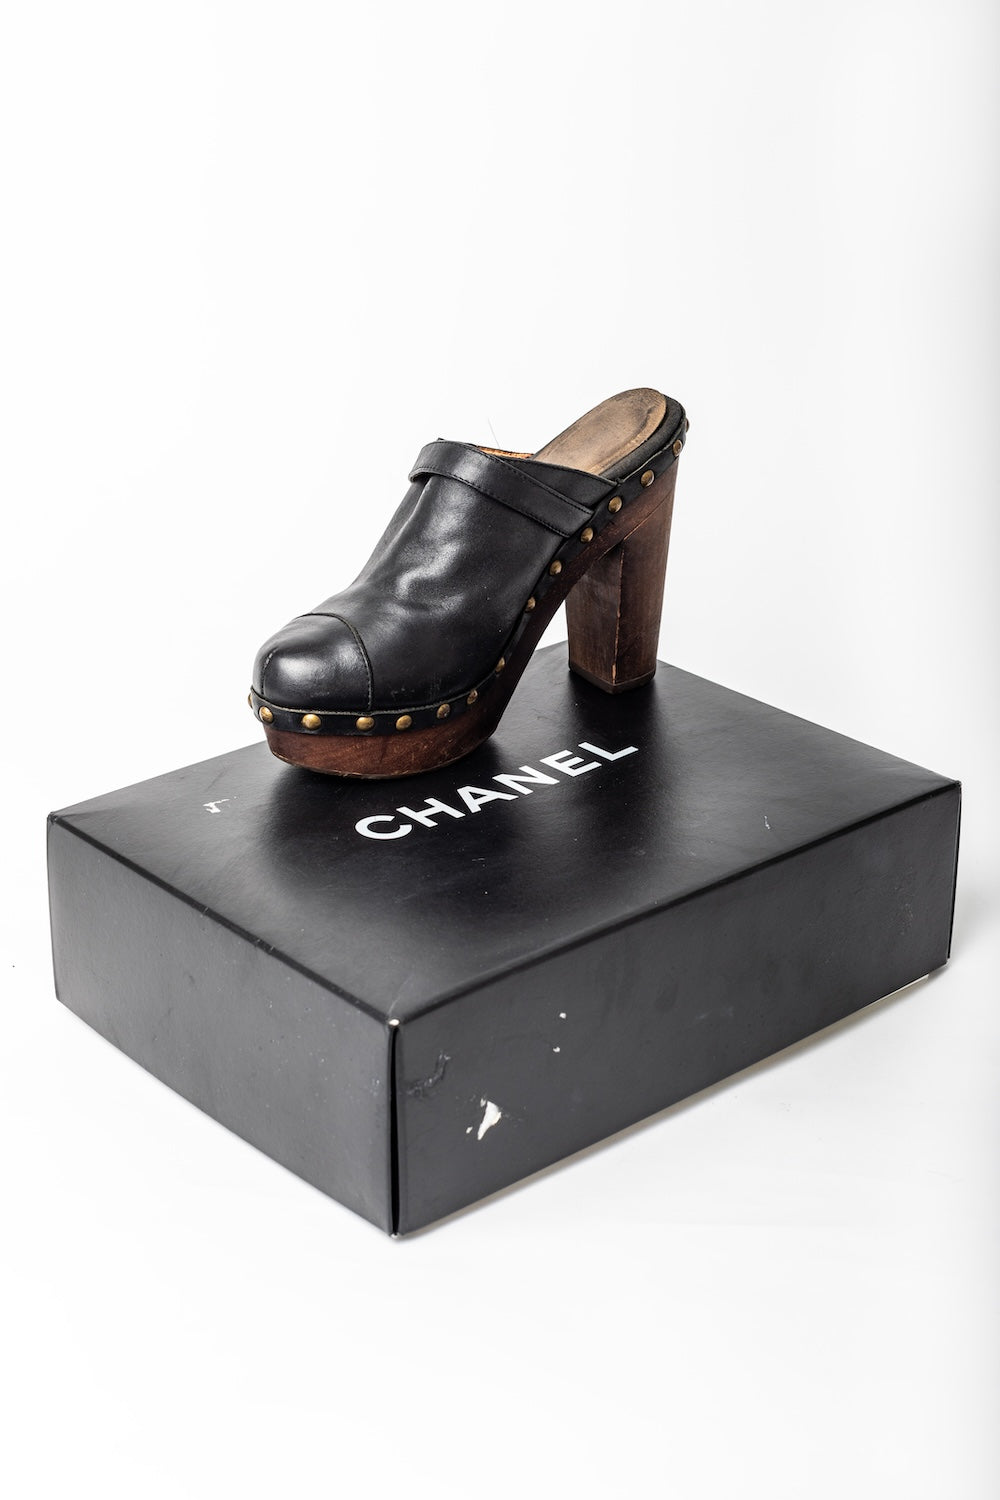 Chanel <br> S/S 2010 runway CC logo studded leather platform clogs